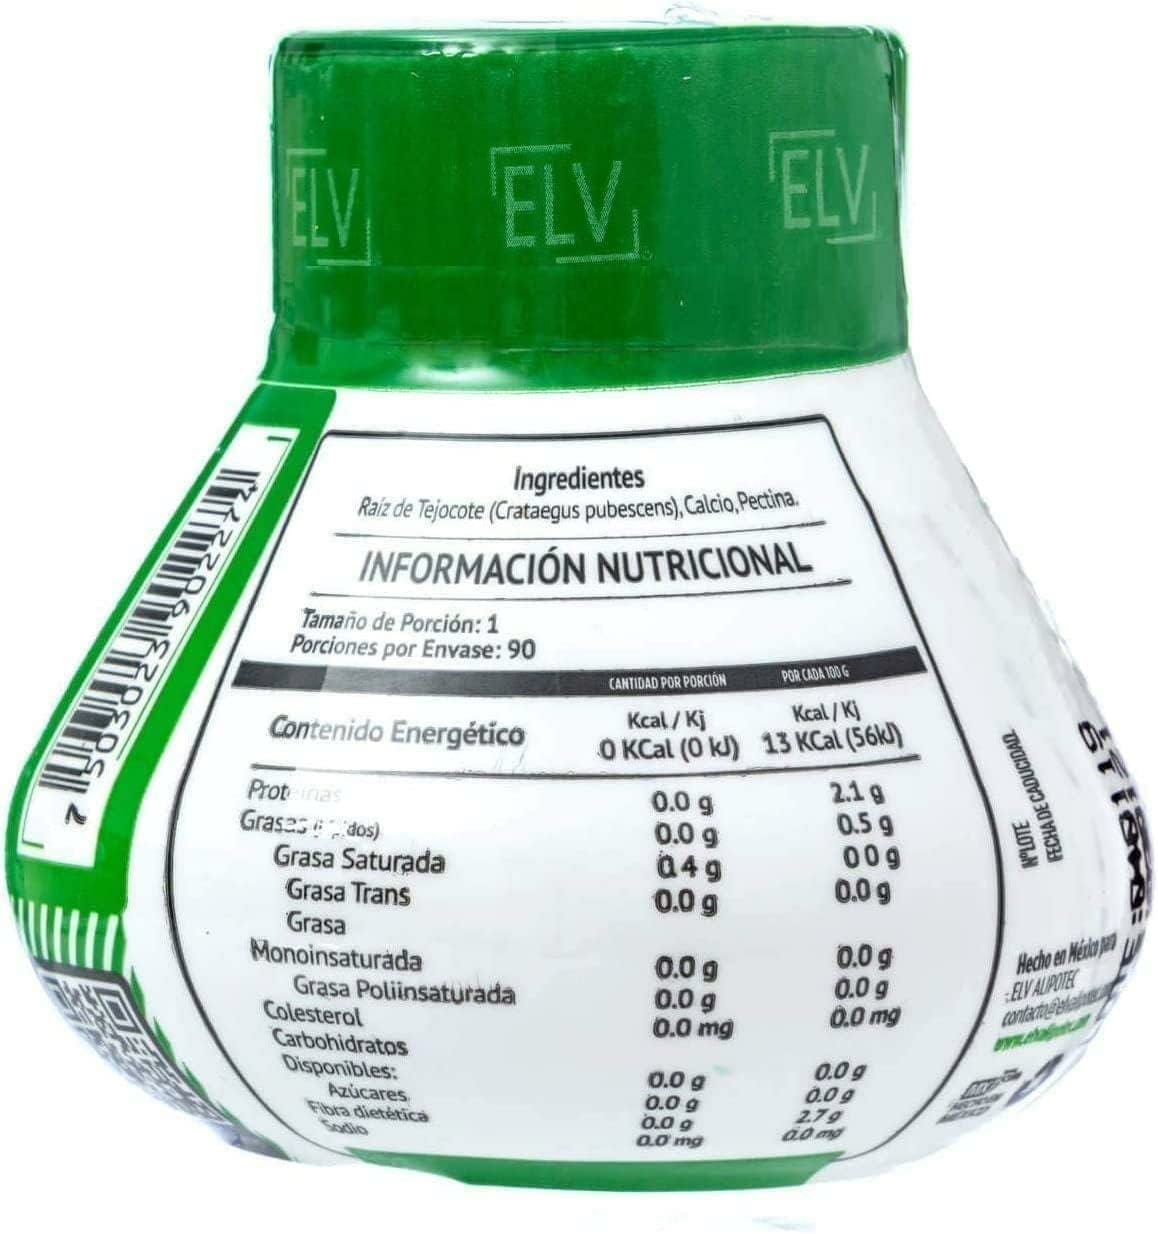 Nutraholics ELV Raiz de Tejocote Cleanse 3 Months Supply Original USA FDA Label review